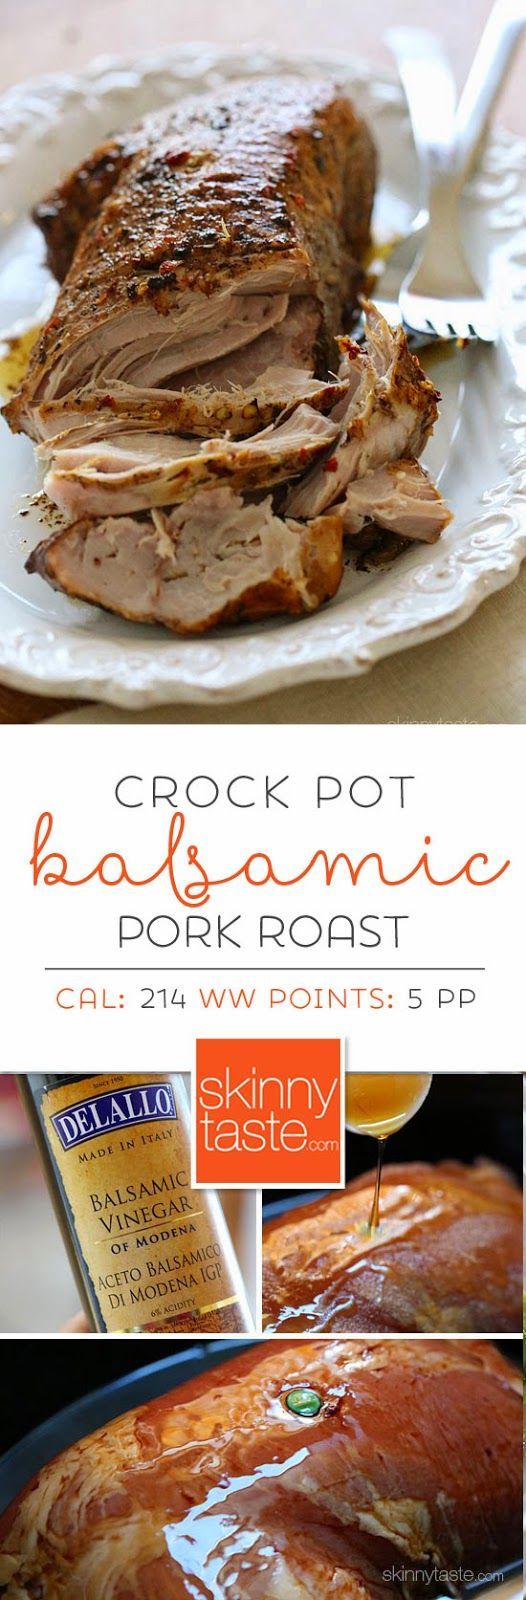 Crock Pot Balsamic Pork Roast www.marykay.com/michellefield www.youravon.com/mfield